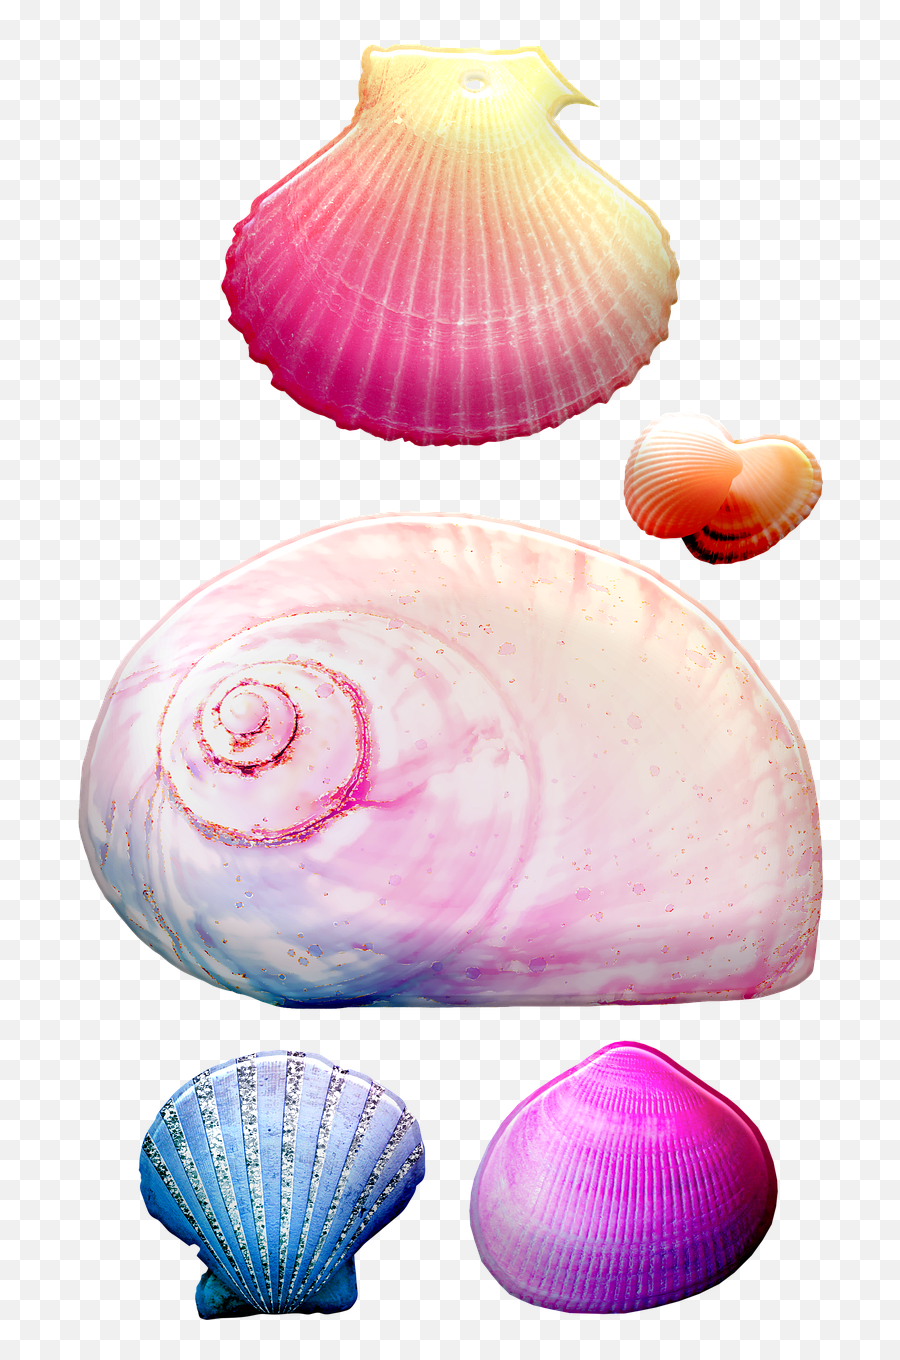 Seashells Shells Conch - Free Image On Pixabay Png,Seashell Transparent